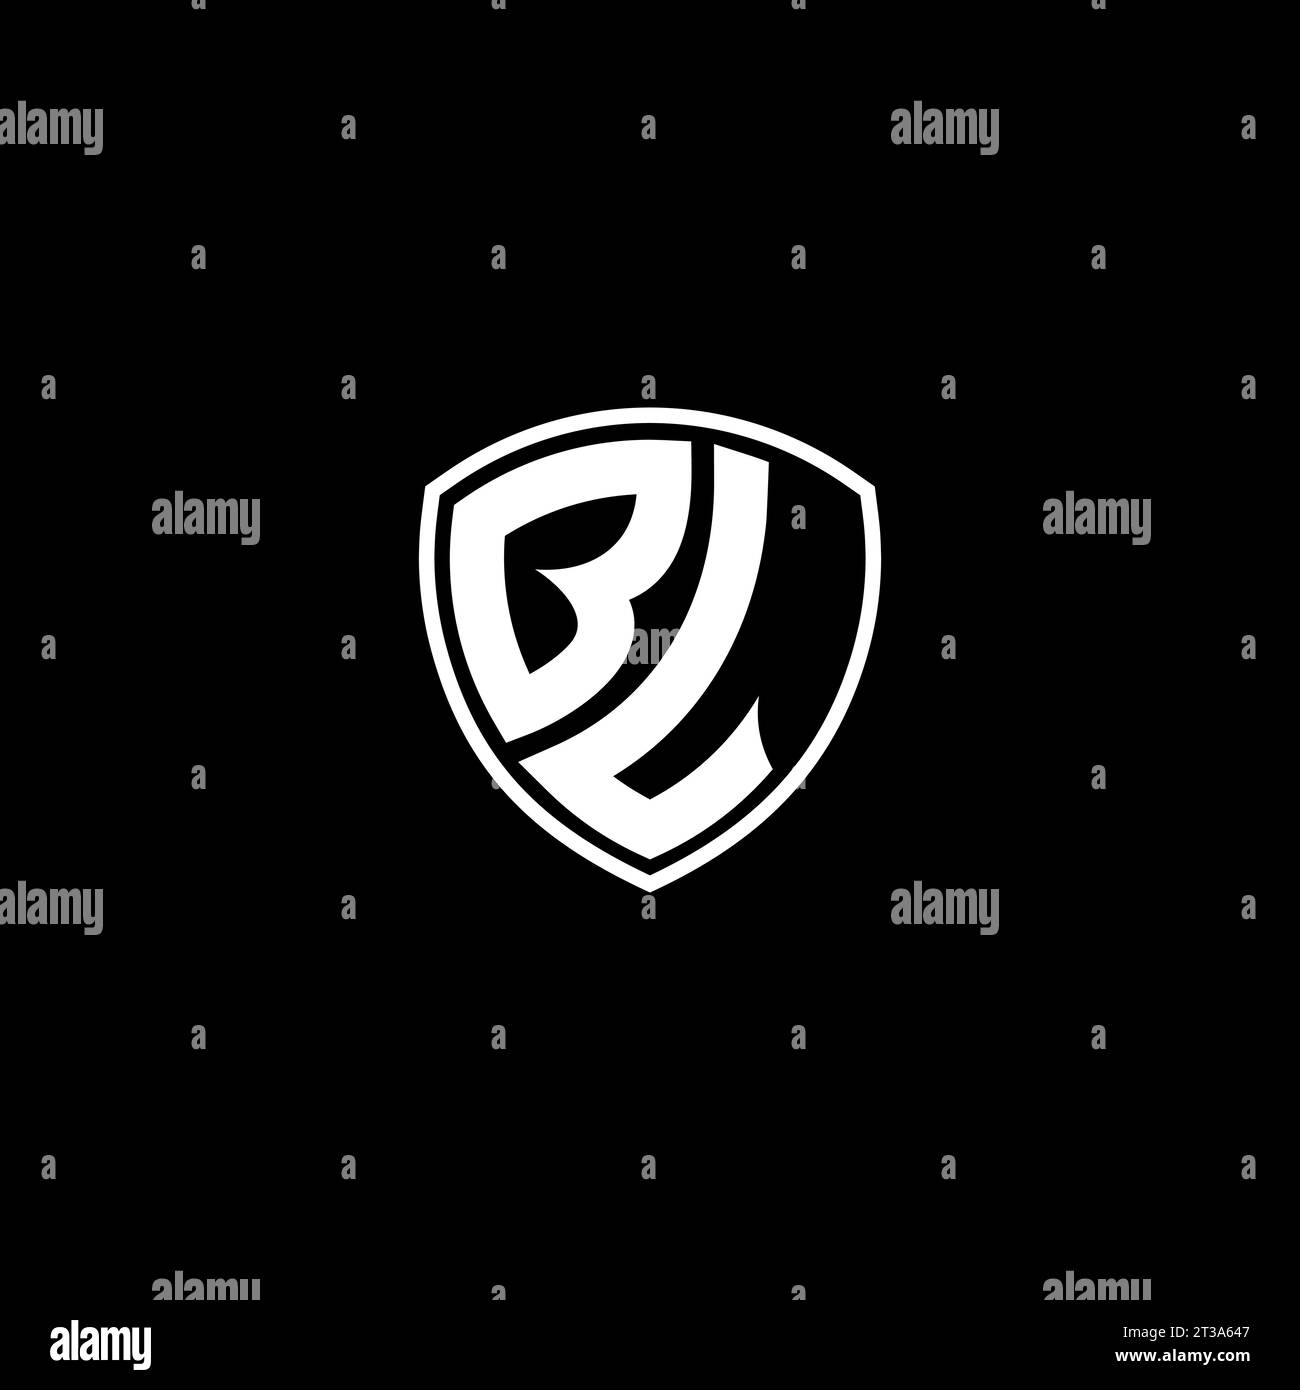 BL logo monogram emblem style with shield shape design template ideas Stock Vector